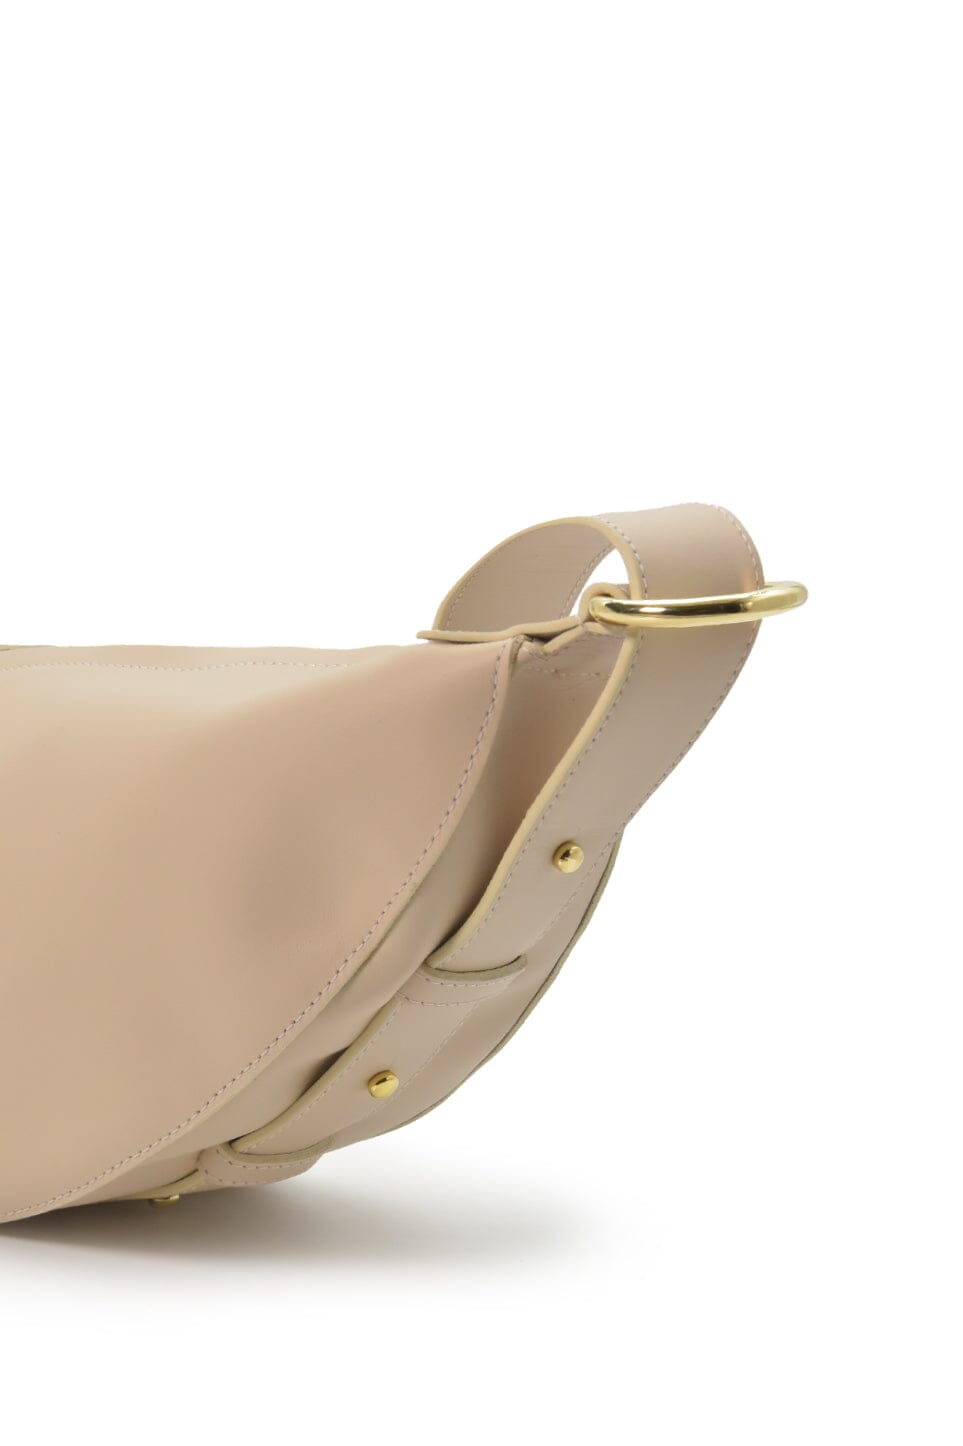 Cream multi-position crossbody bag Handbags Leandra 